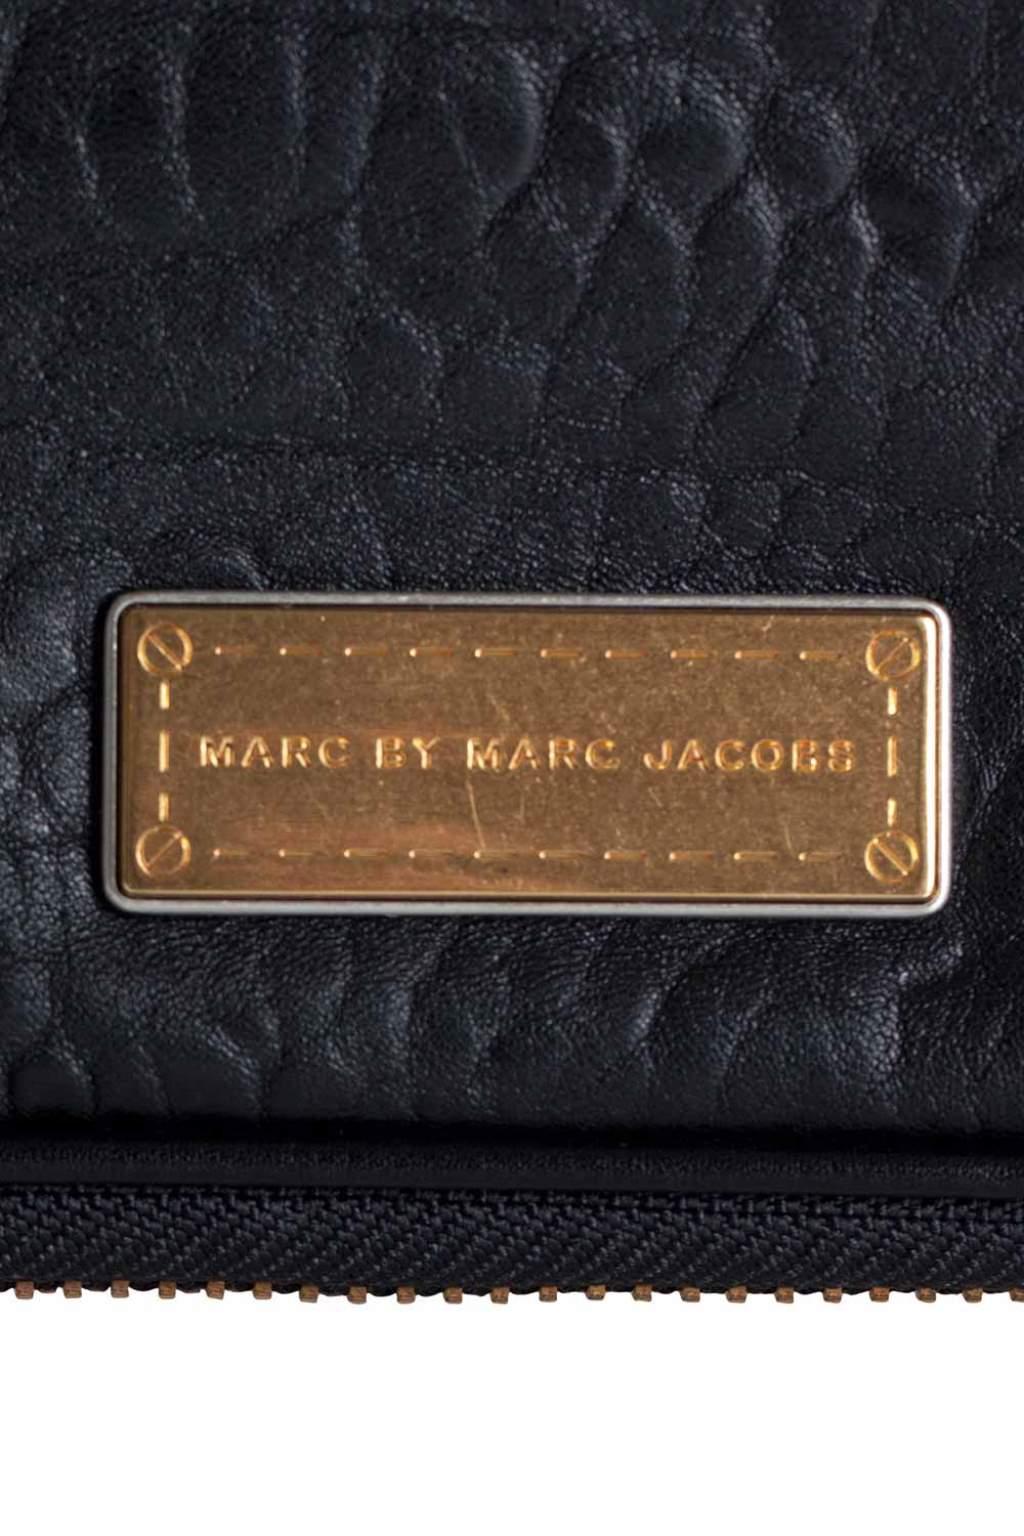 Marc by Marc Jacobs Black Leather Expandable Zip Wristlet Clutch 1